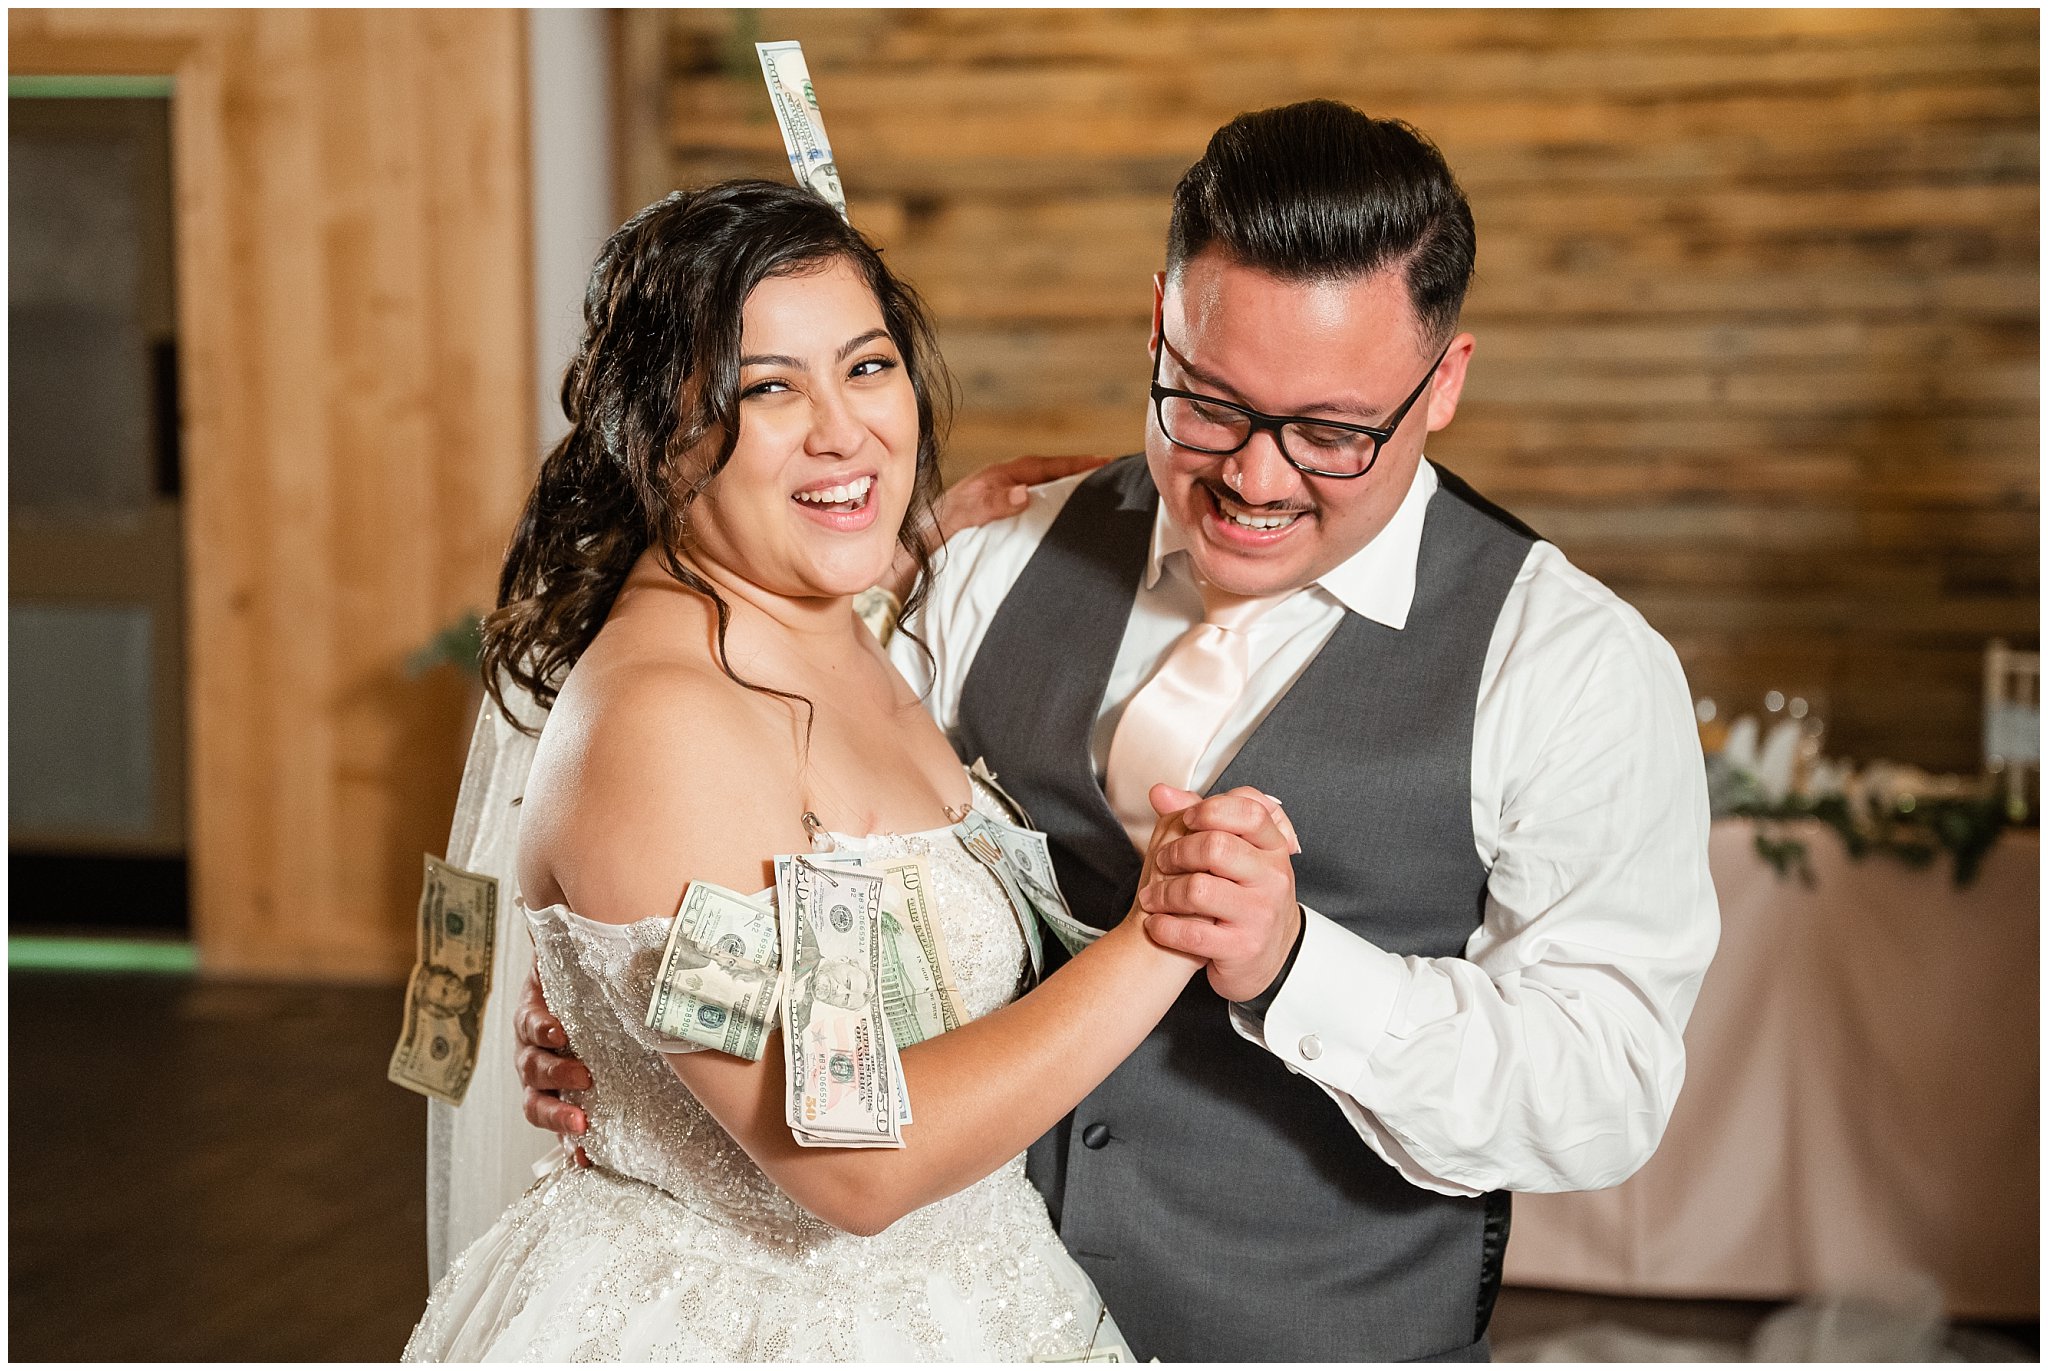 Money dance during wedding | Rustic Mountain Destination Wedding at Oak Hills Utah | Jessie and Dallin Photography